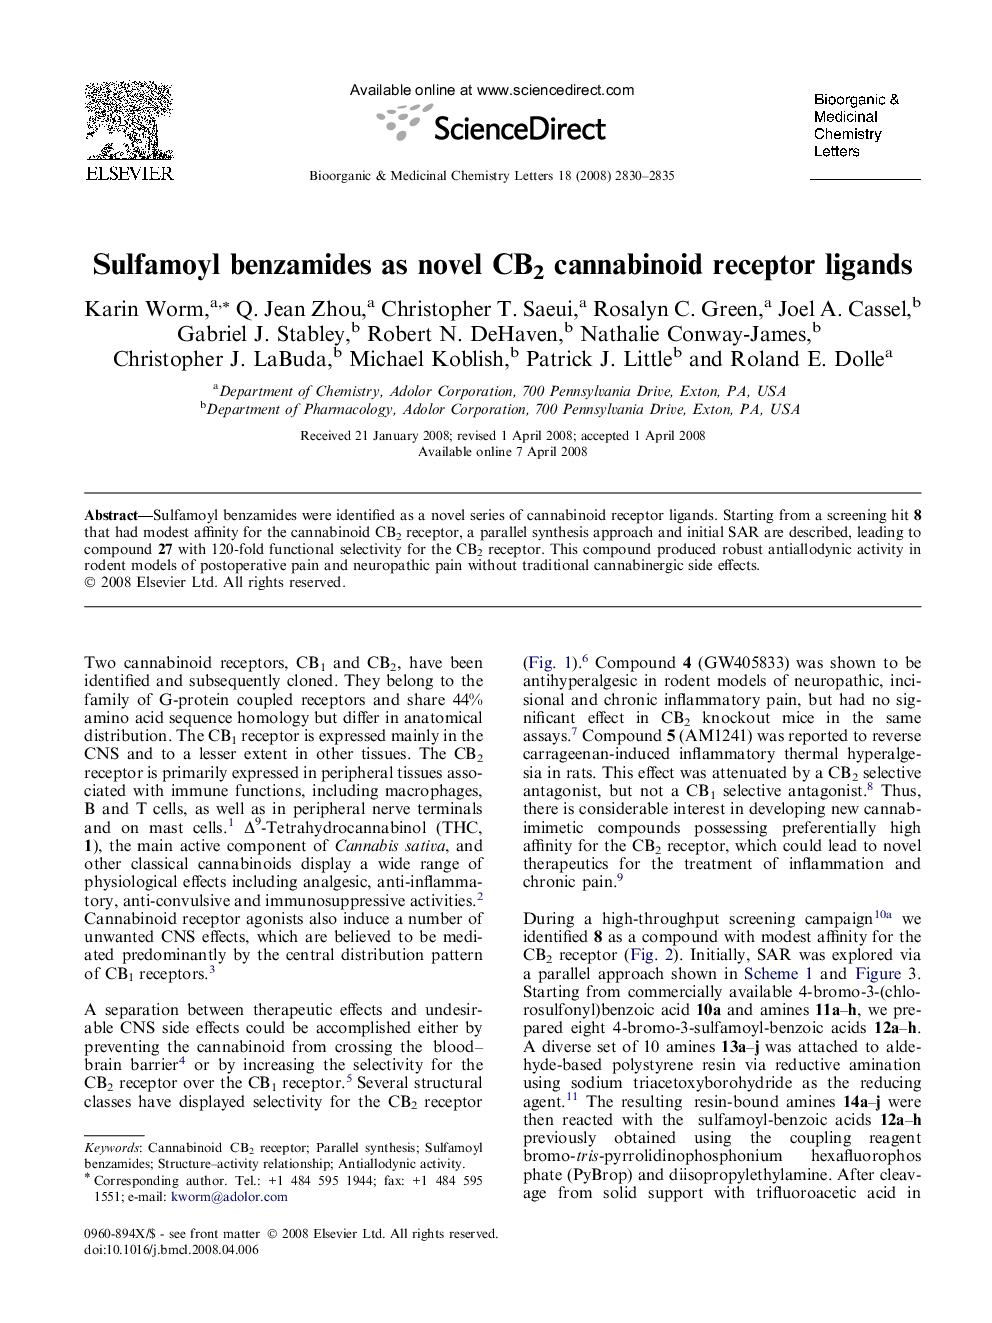 Sulfamoyl benzamides as novel CB2 cannabinoid receptor ligands